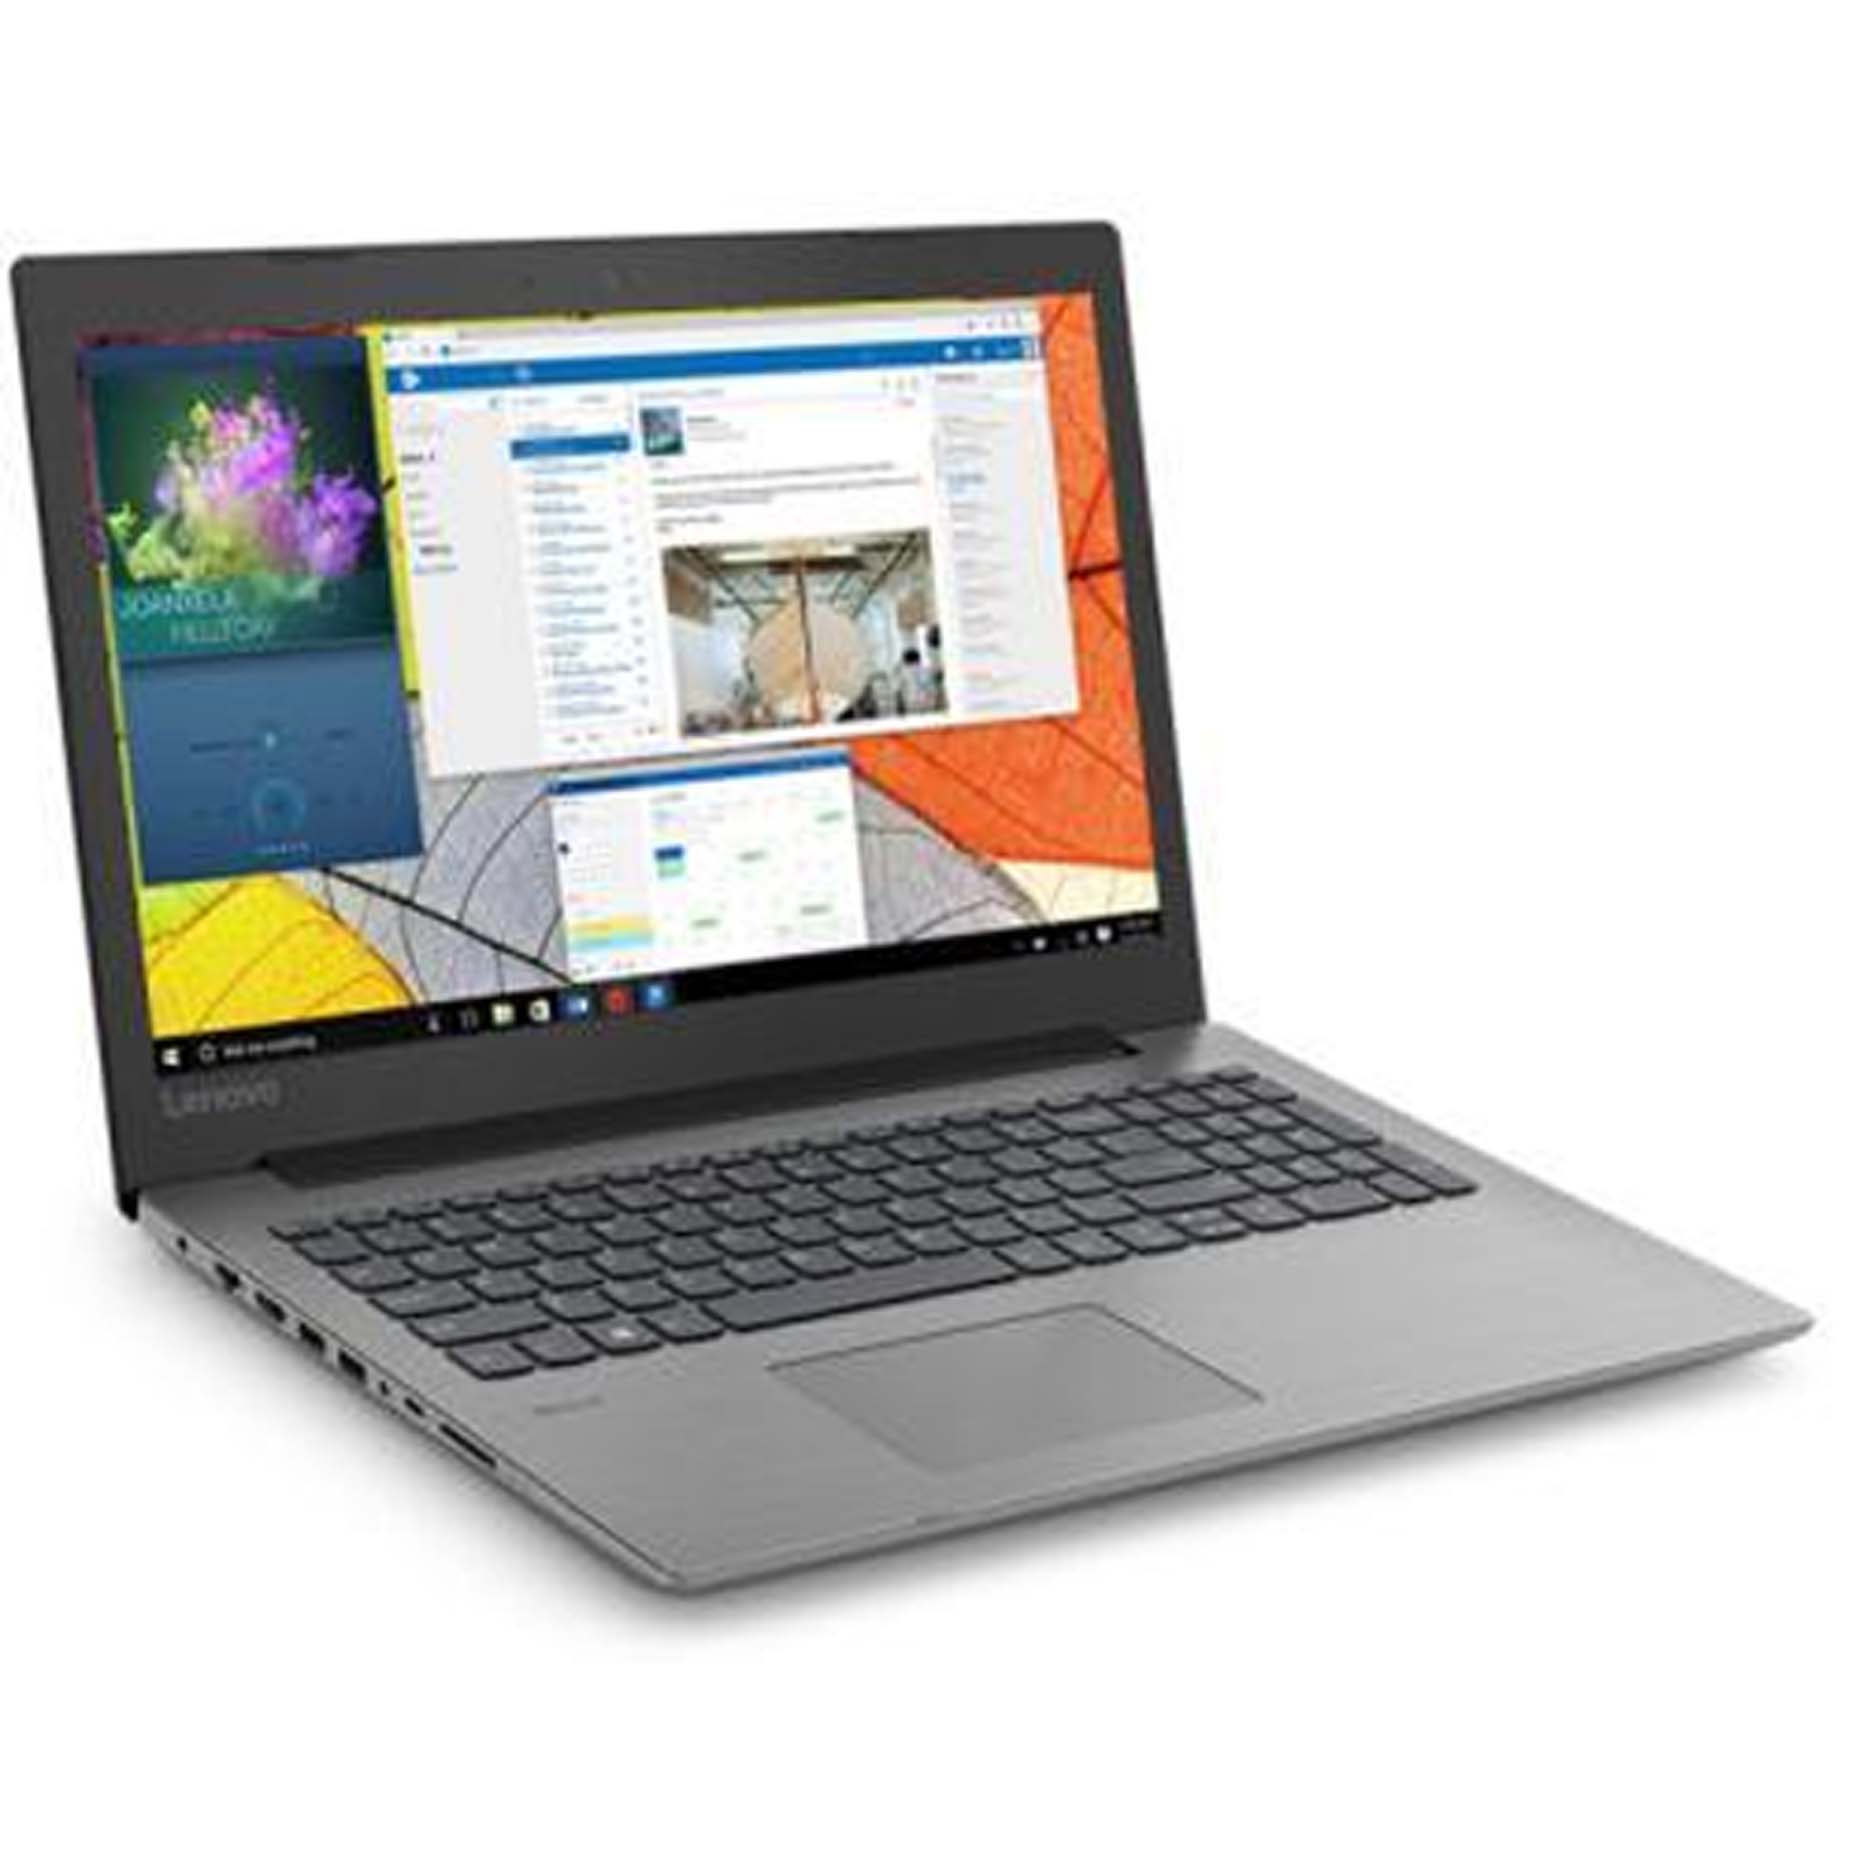 Harga Lenovo Ideapad IP330-15ICH EDID Laptop Intel Core i7-8750H 4GB+16GB Optane 1TB Nvidia GTX1050 4GB NO DVD Windows 10 15.6 Inch Grey